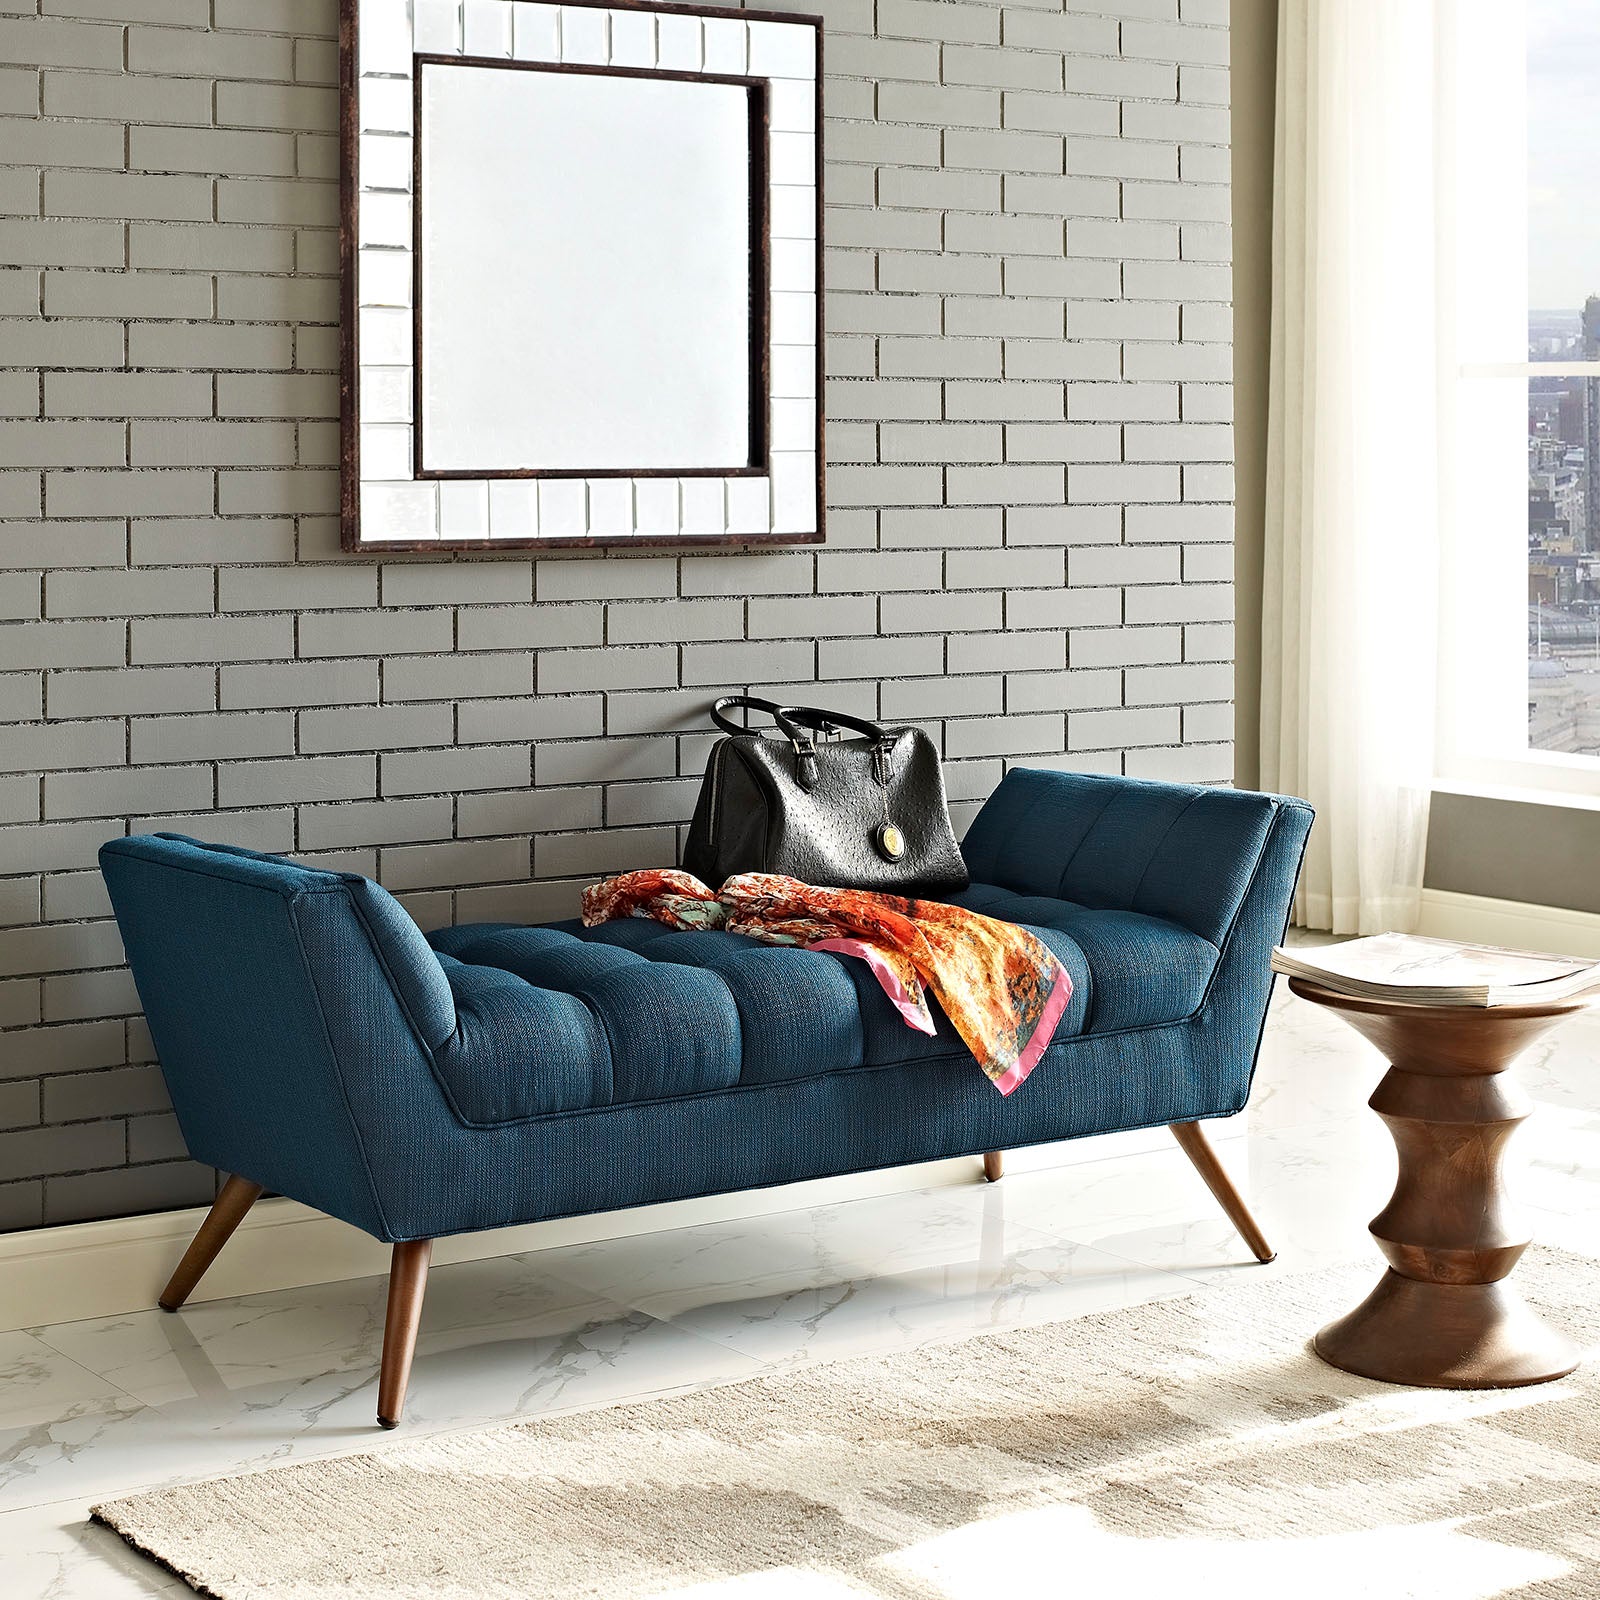 Response Medium Upholstered Fabric Bench - East Shore Modern Home Furnishings